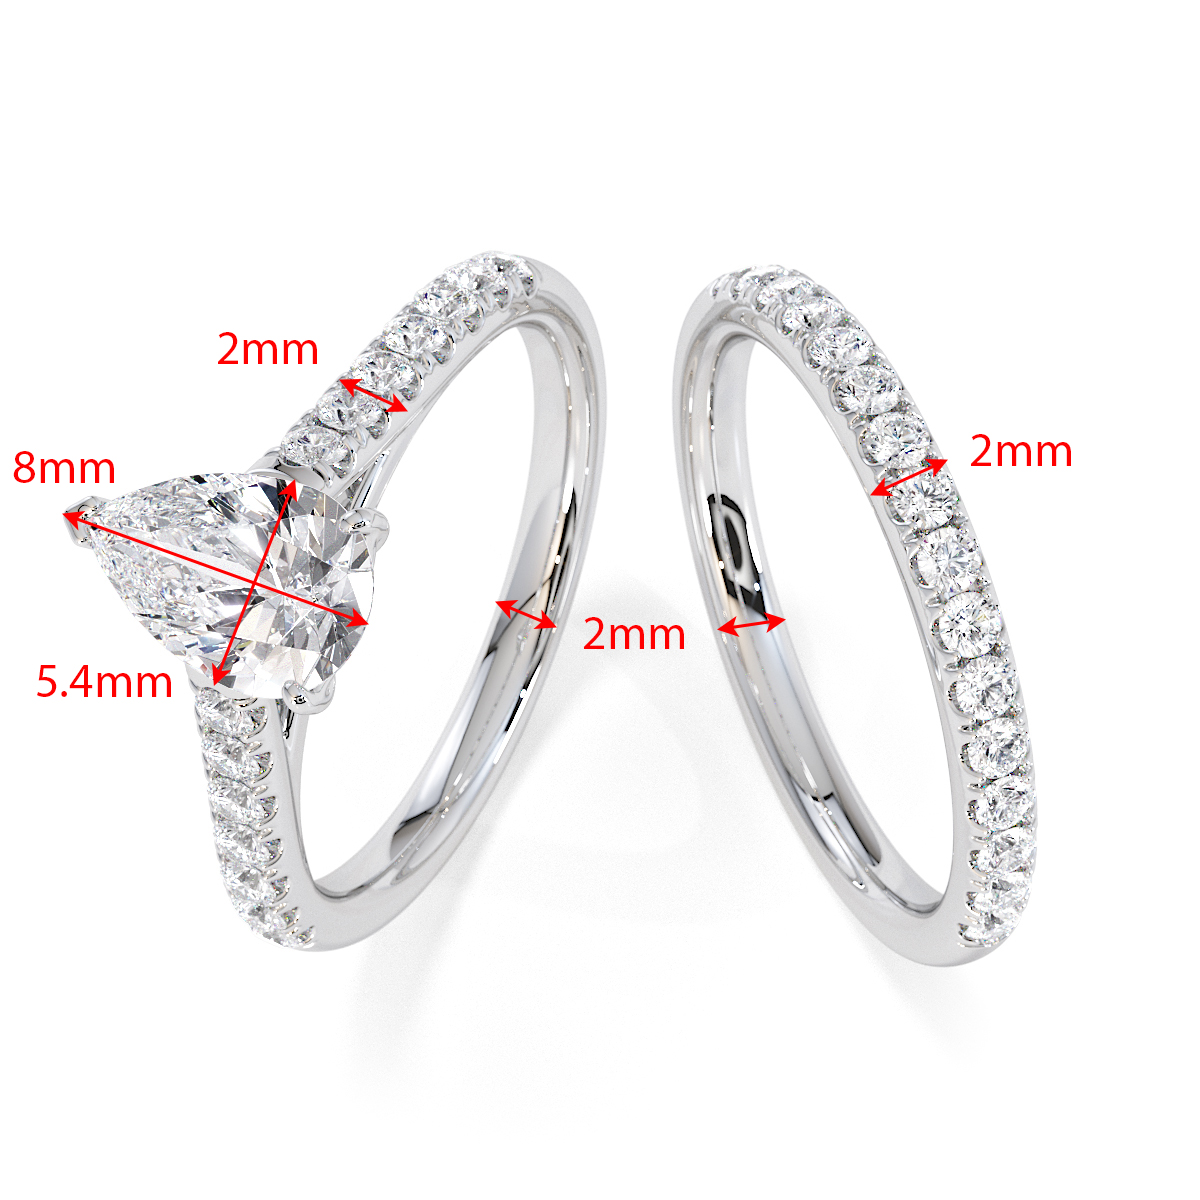 Gold / Platinum Ruby and Diamond Engagement Ring RZ3355